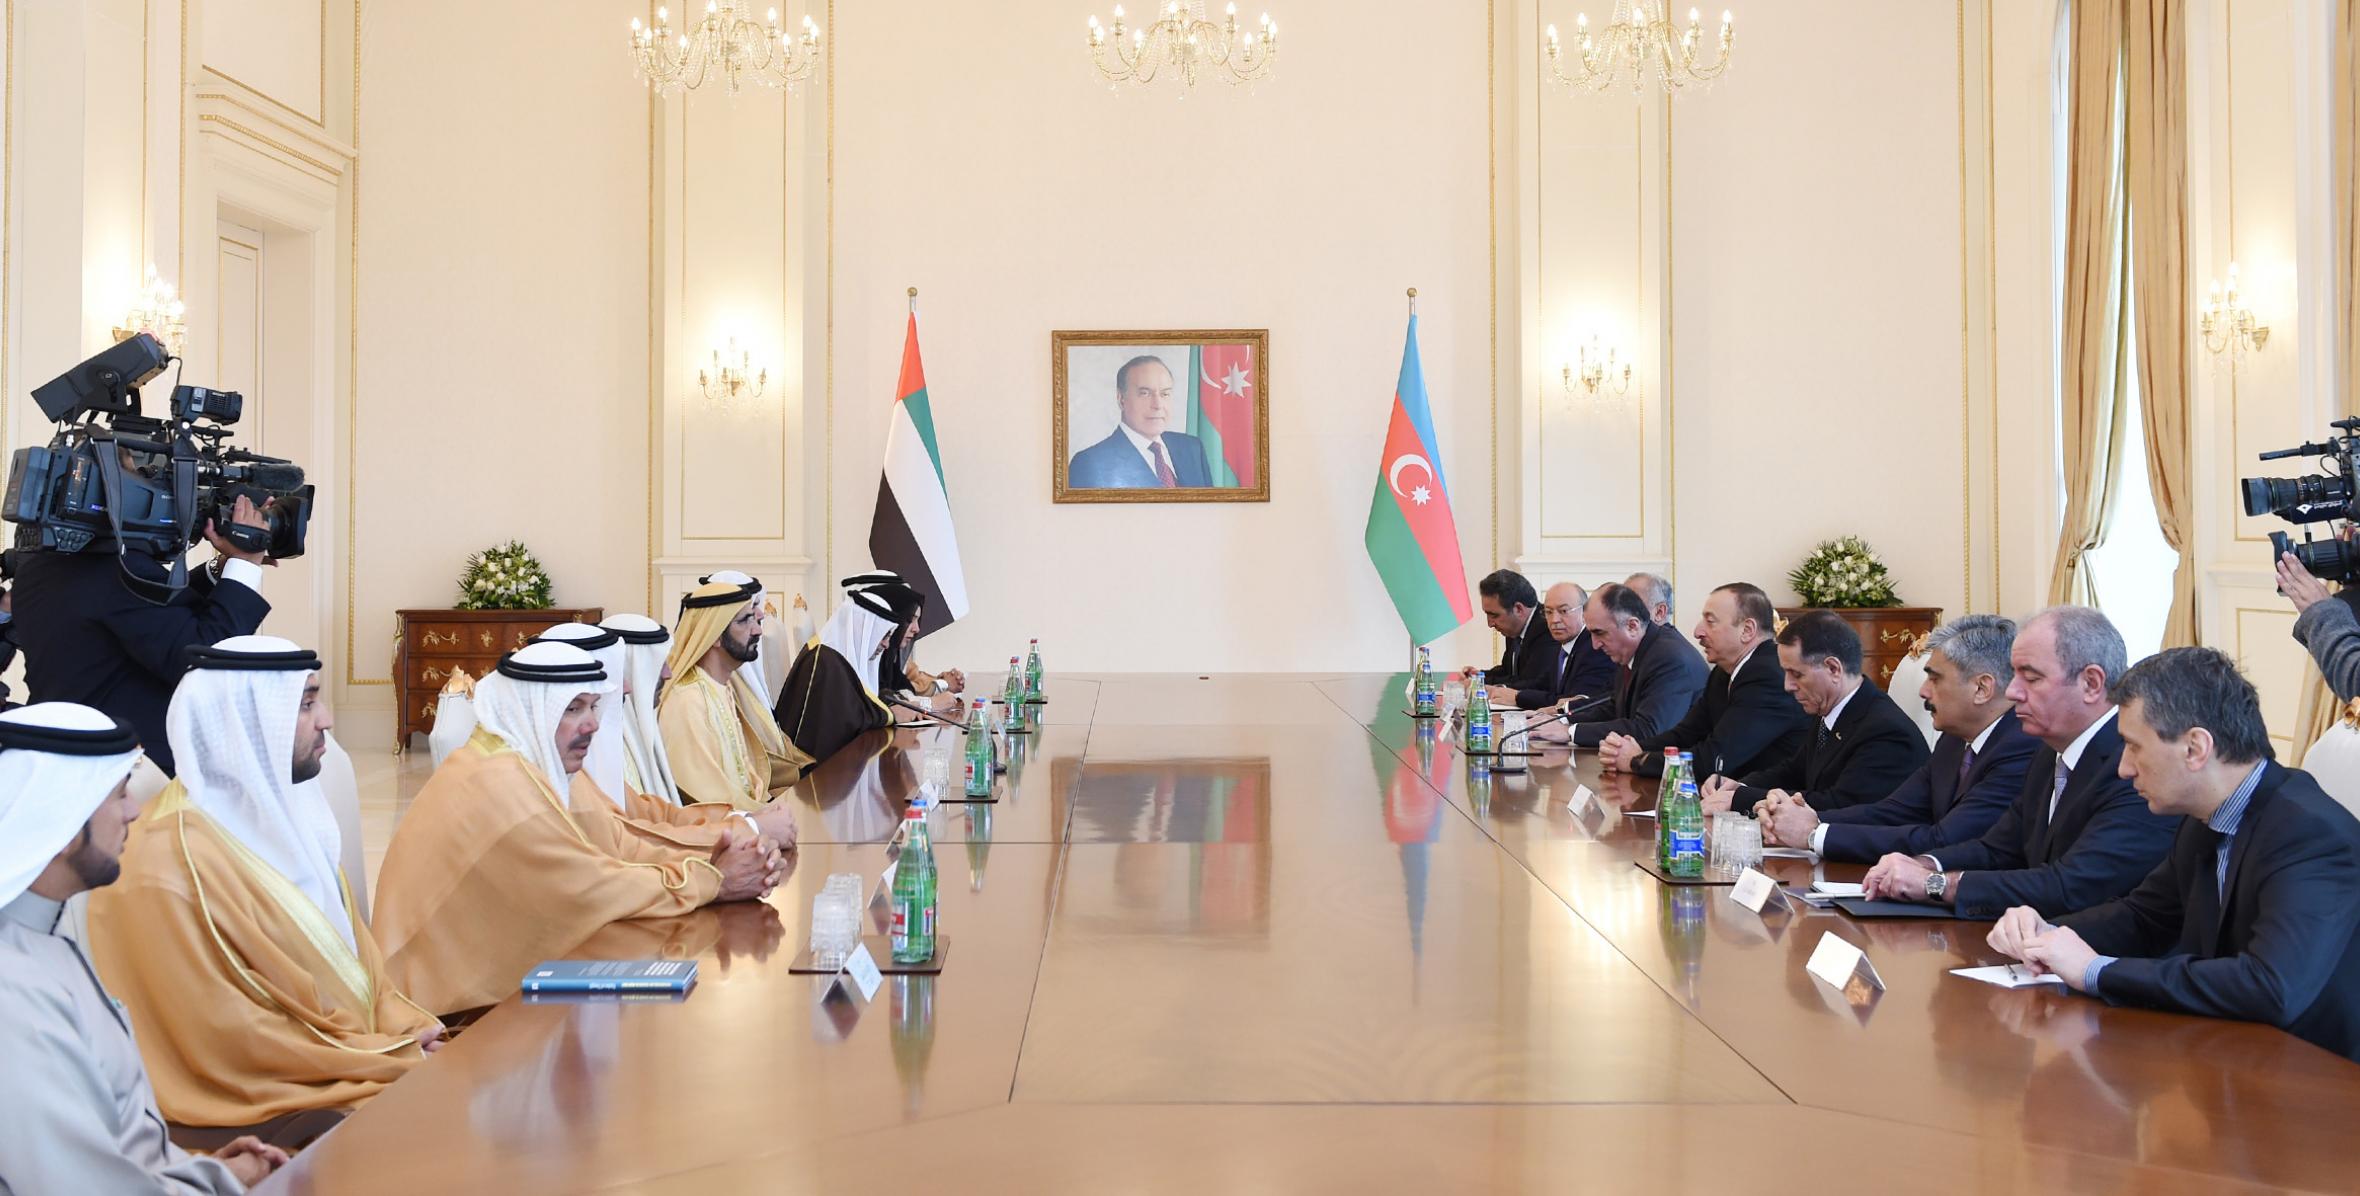 Ilham Aliyev and His Highness Sheikh Mohammed bin Rashid Al Maktoum held an expanded meeting